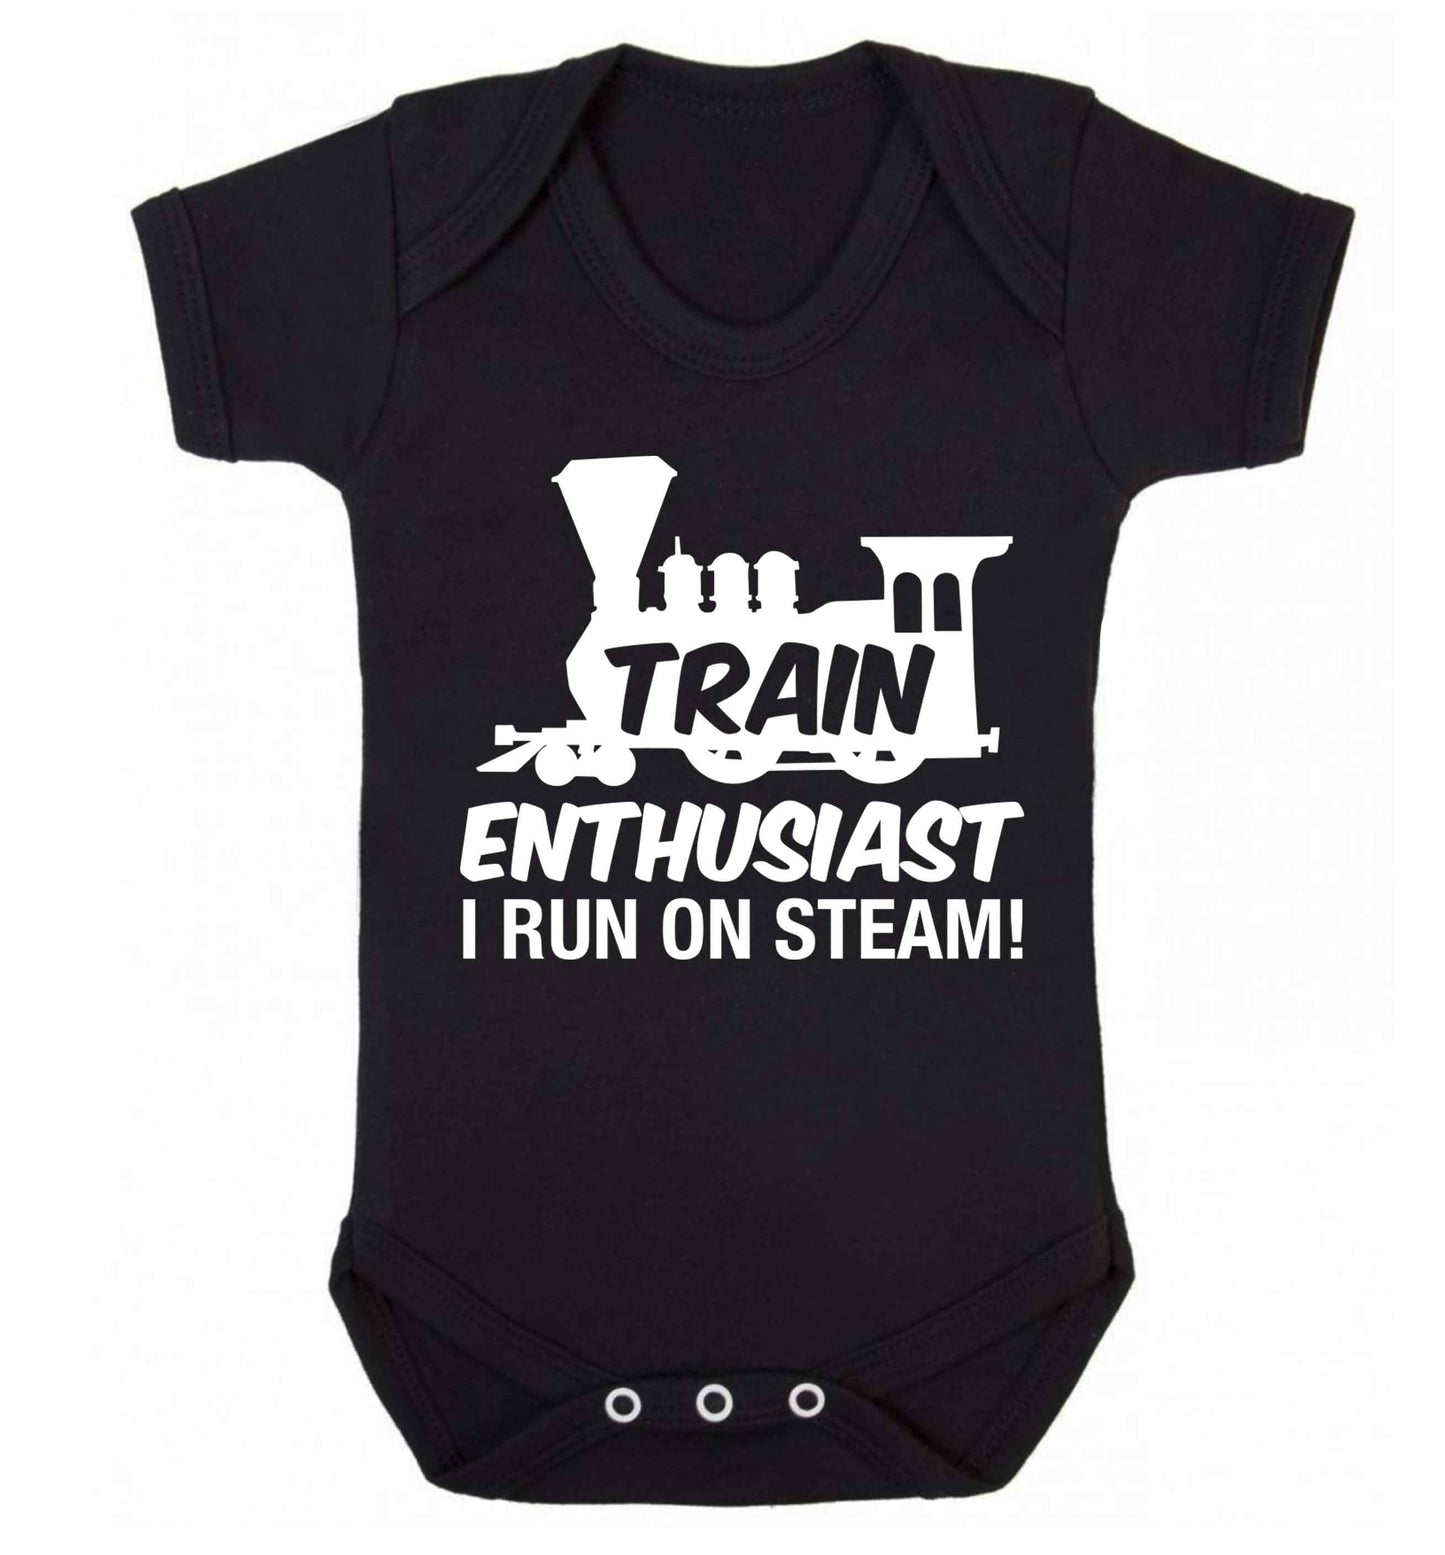 Train enthusiast I run on steam Baby Vest black 18-24 months